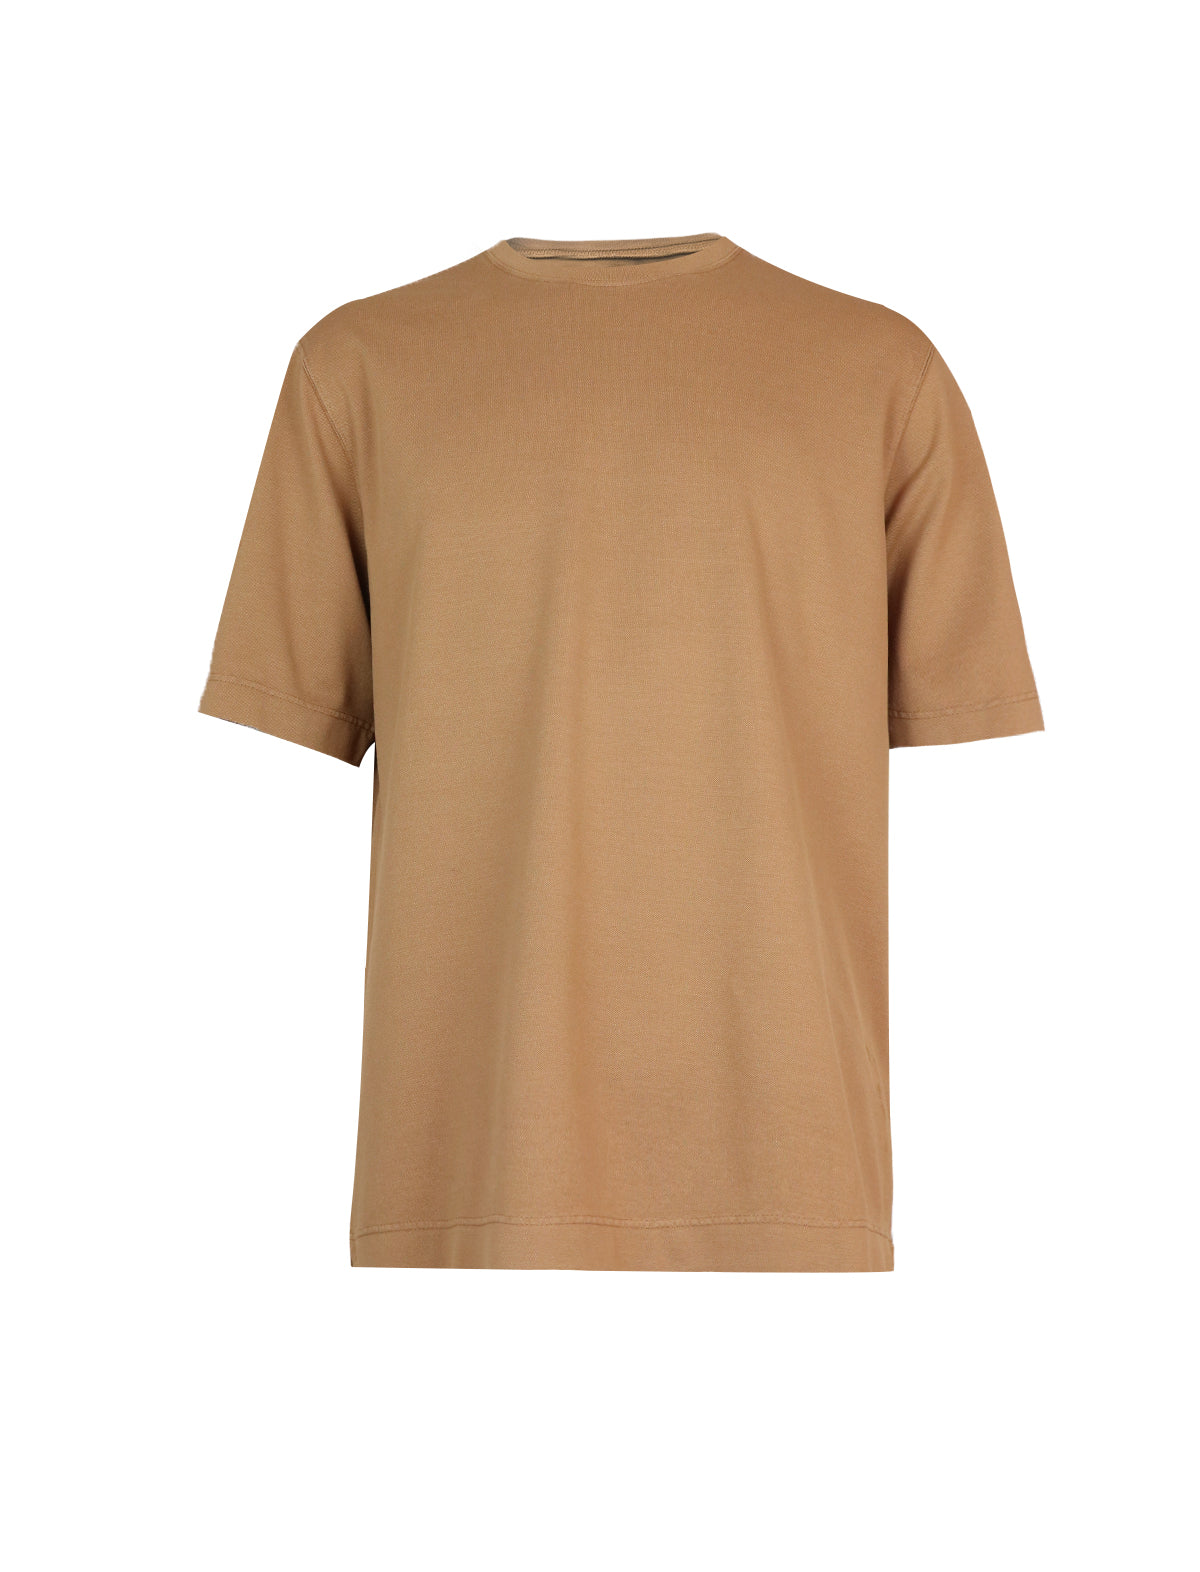 CIRCOLO 1901 Cotton-Blend T-Shirt in Camel